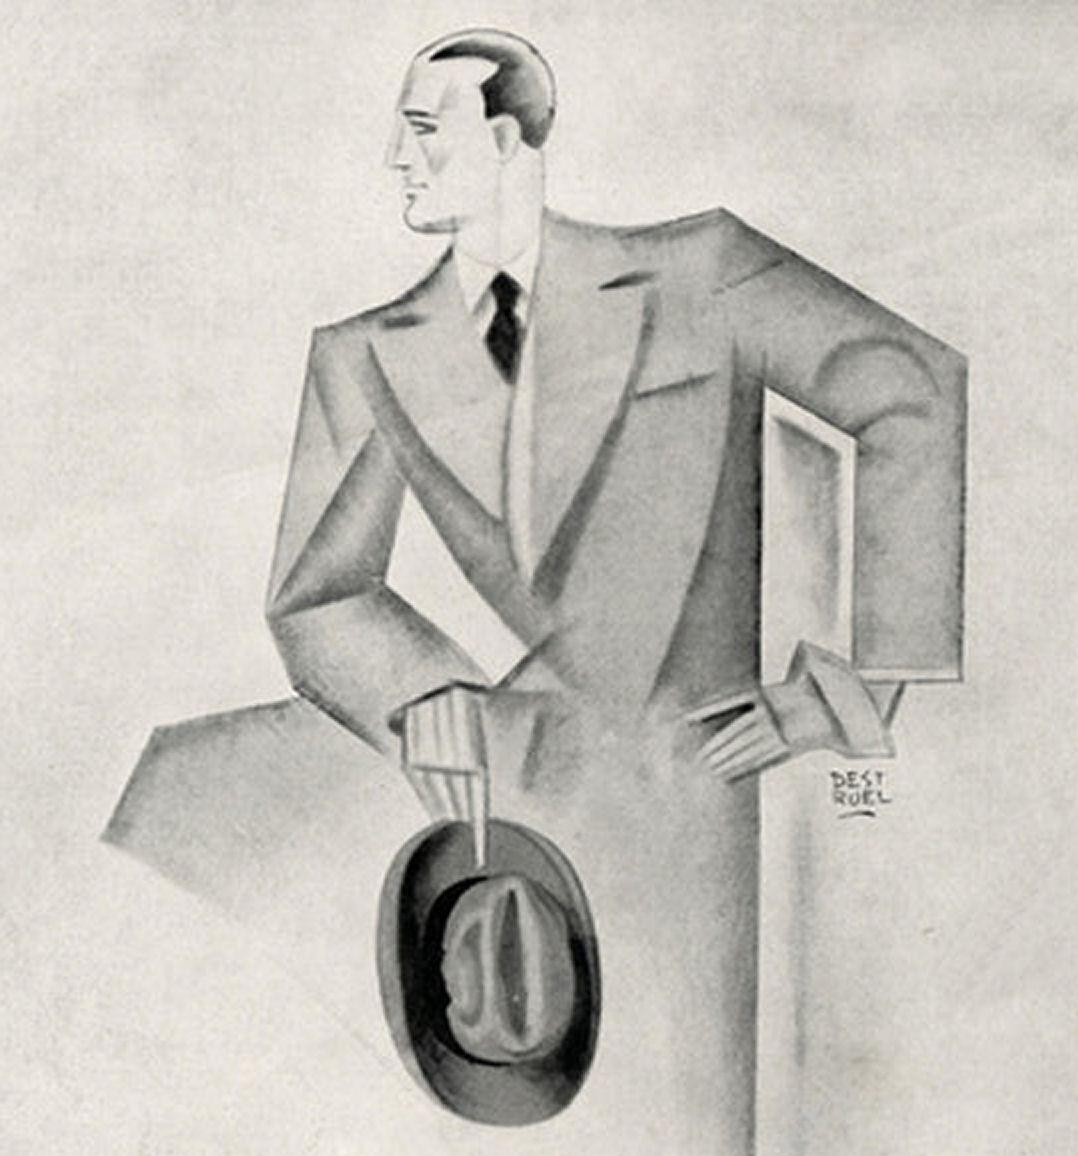 Art Deco Original French Print Advert for Hats, circa 1929